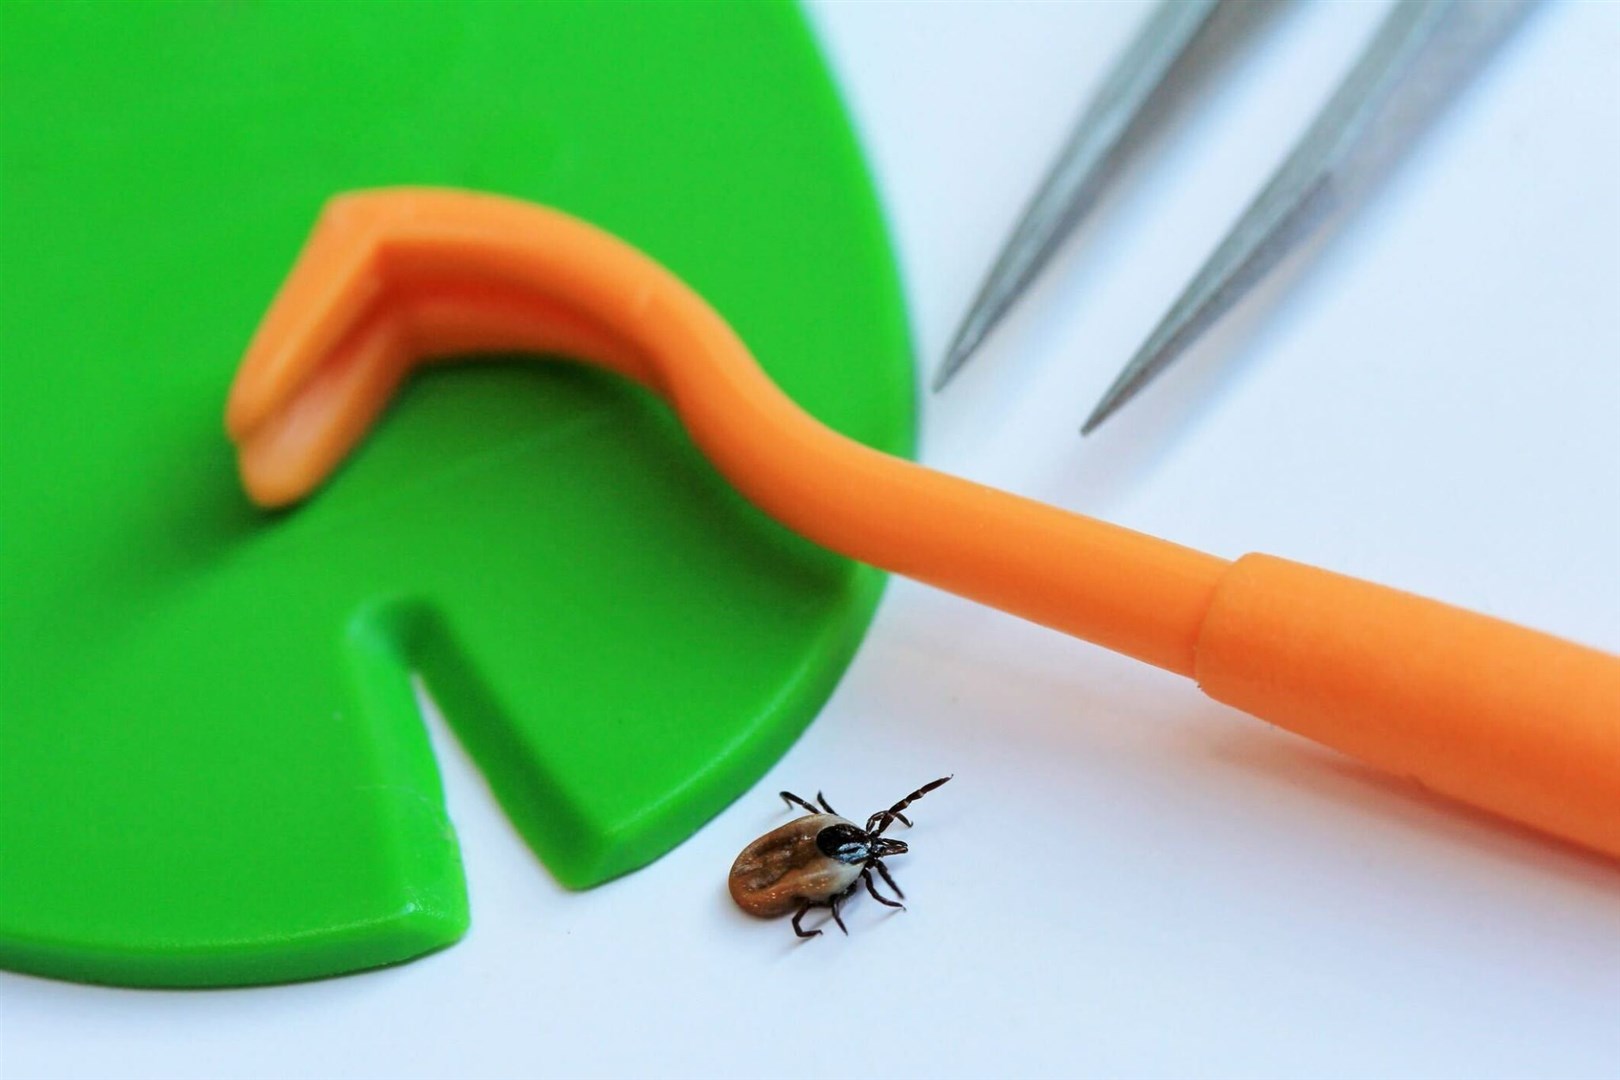 Lyme Disease - tick removal tool